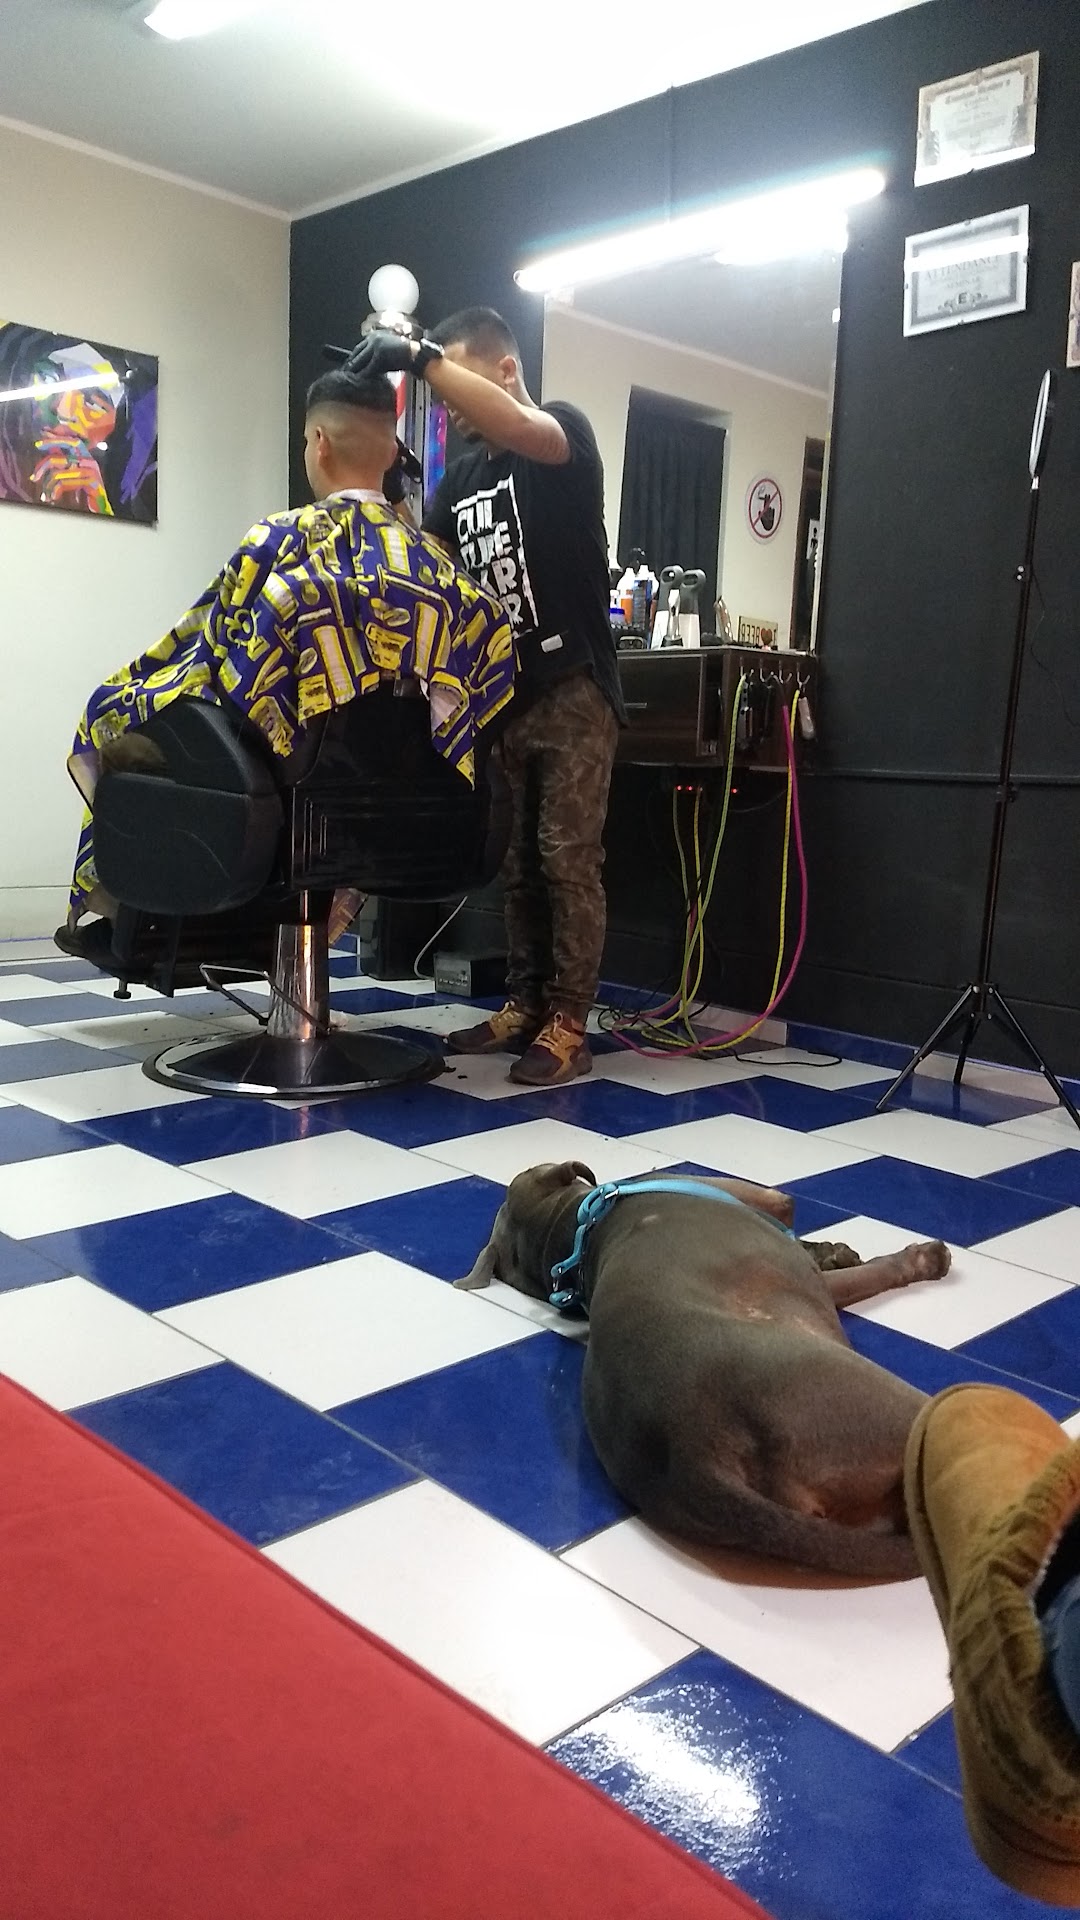 Gk21 barbershop